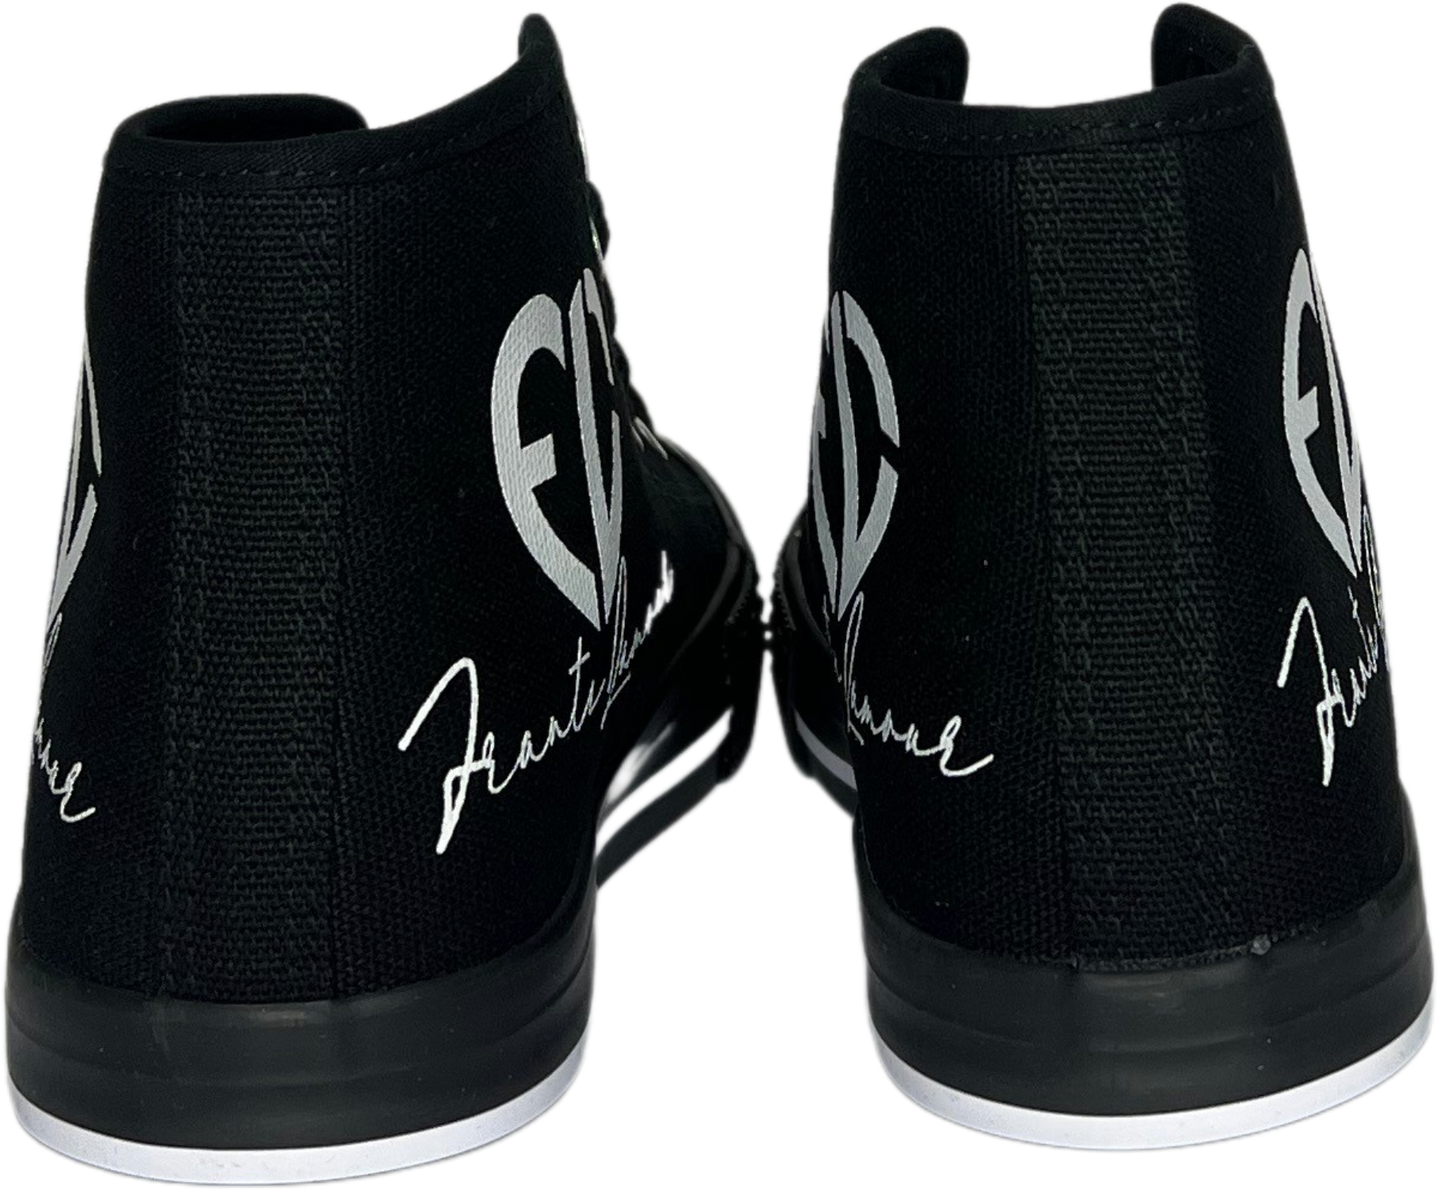 Frantz Lamour Signature Classic Men's High Top Canvas Lace Up Casual Walking Shoes - Black & White